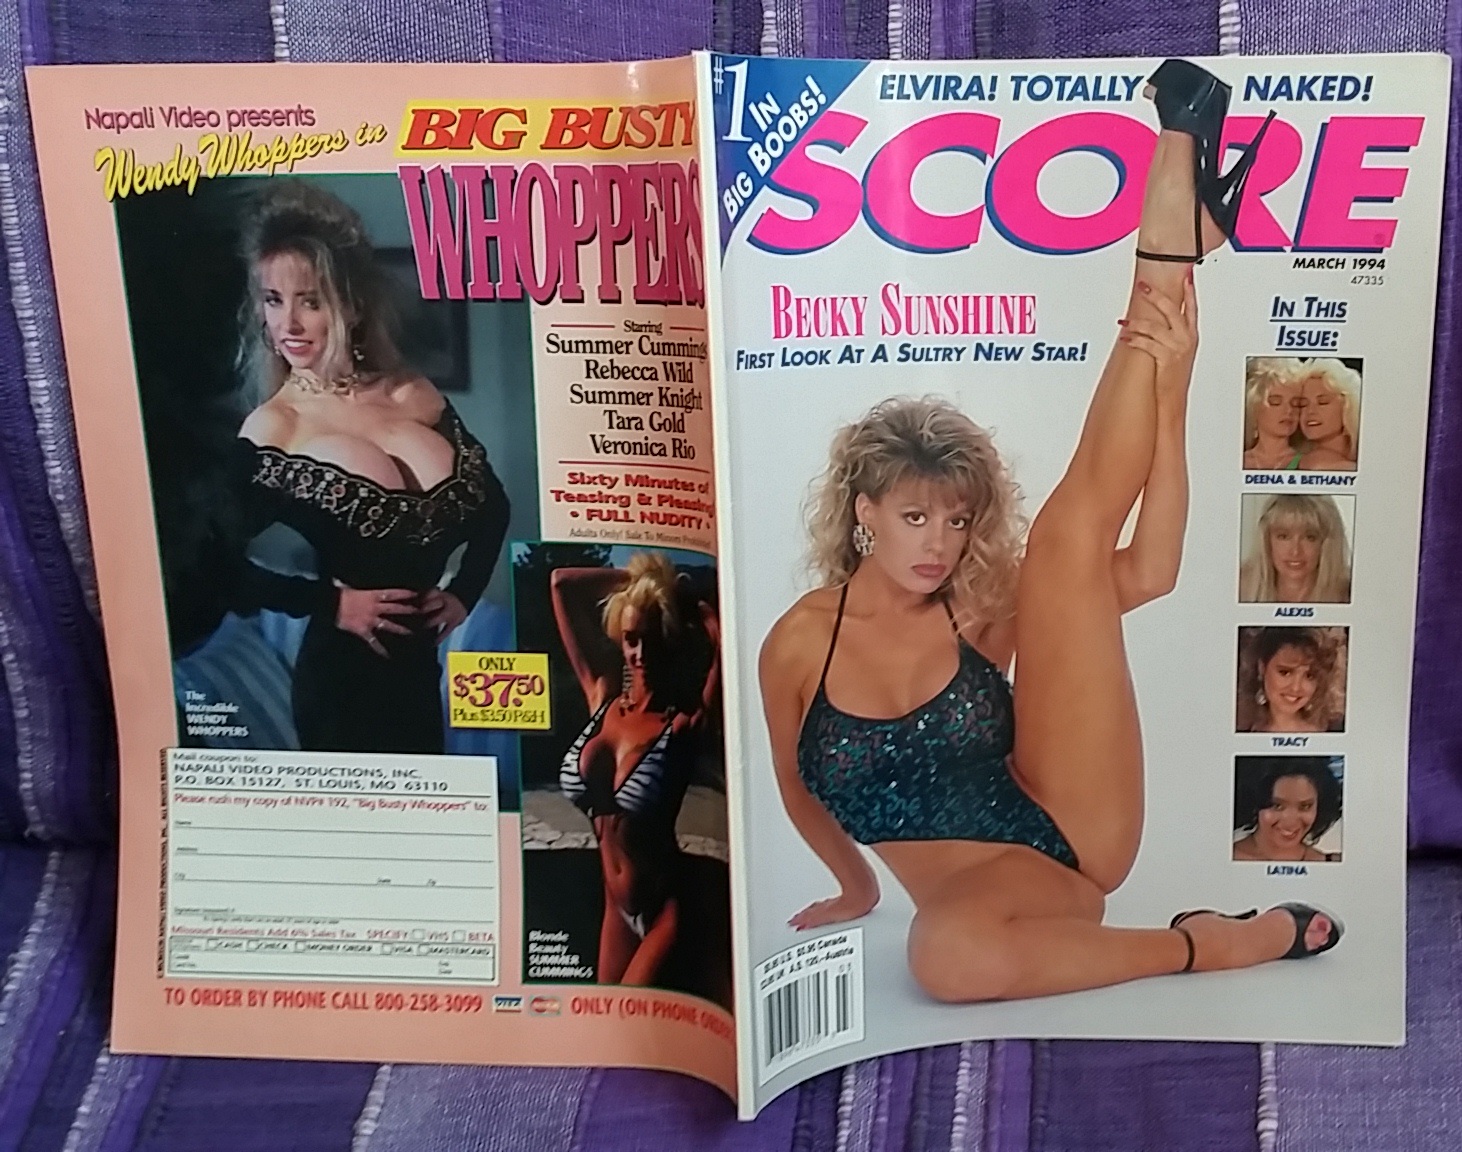 Score March 1994 Porn erotic vintage magazine #1 in Big Boobs Women. mint  condition. Becky Sunshine, Dixie Bubbles, Cassandra Peterson, Deena Duos &  ...